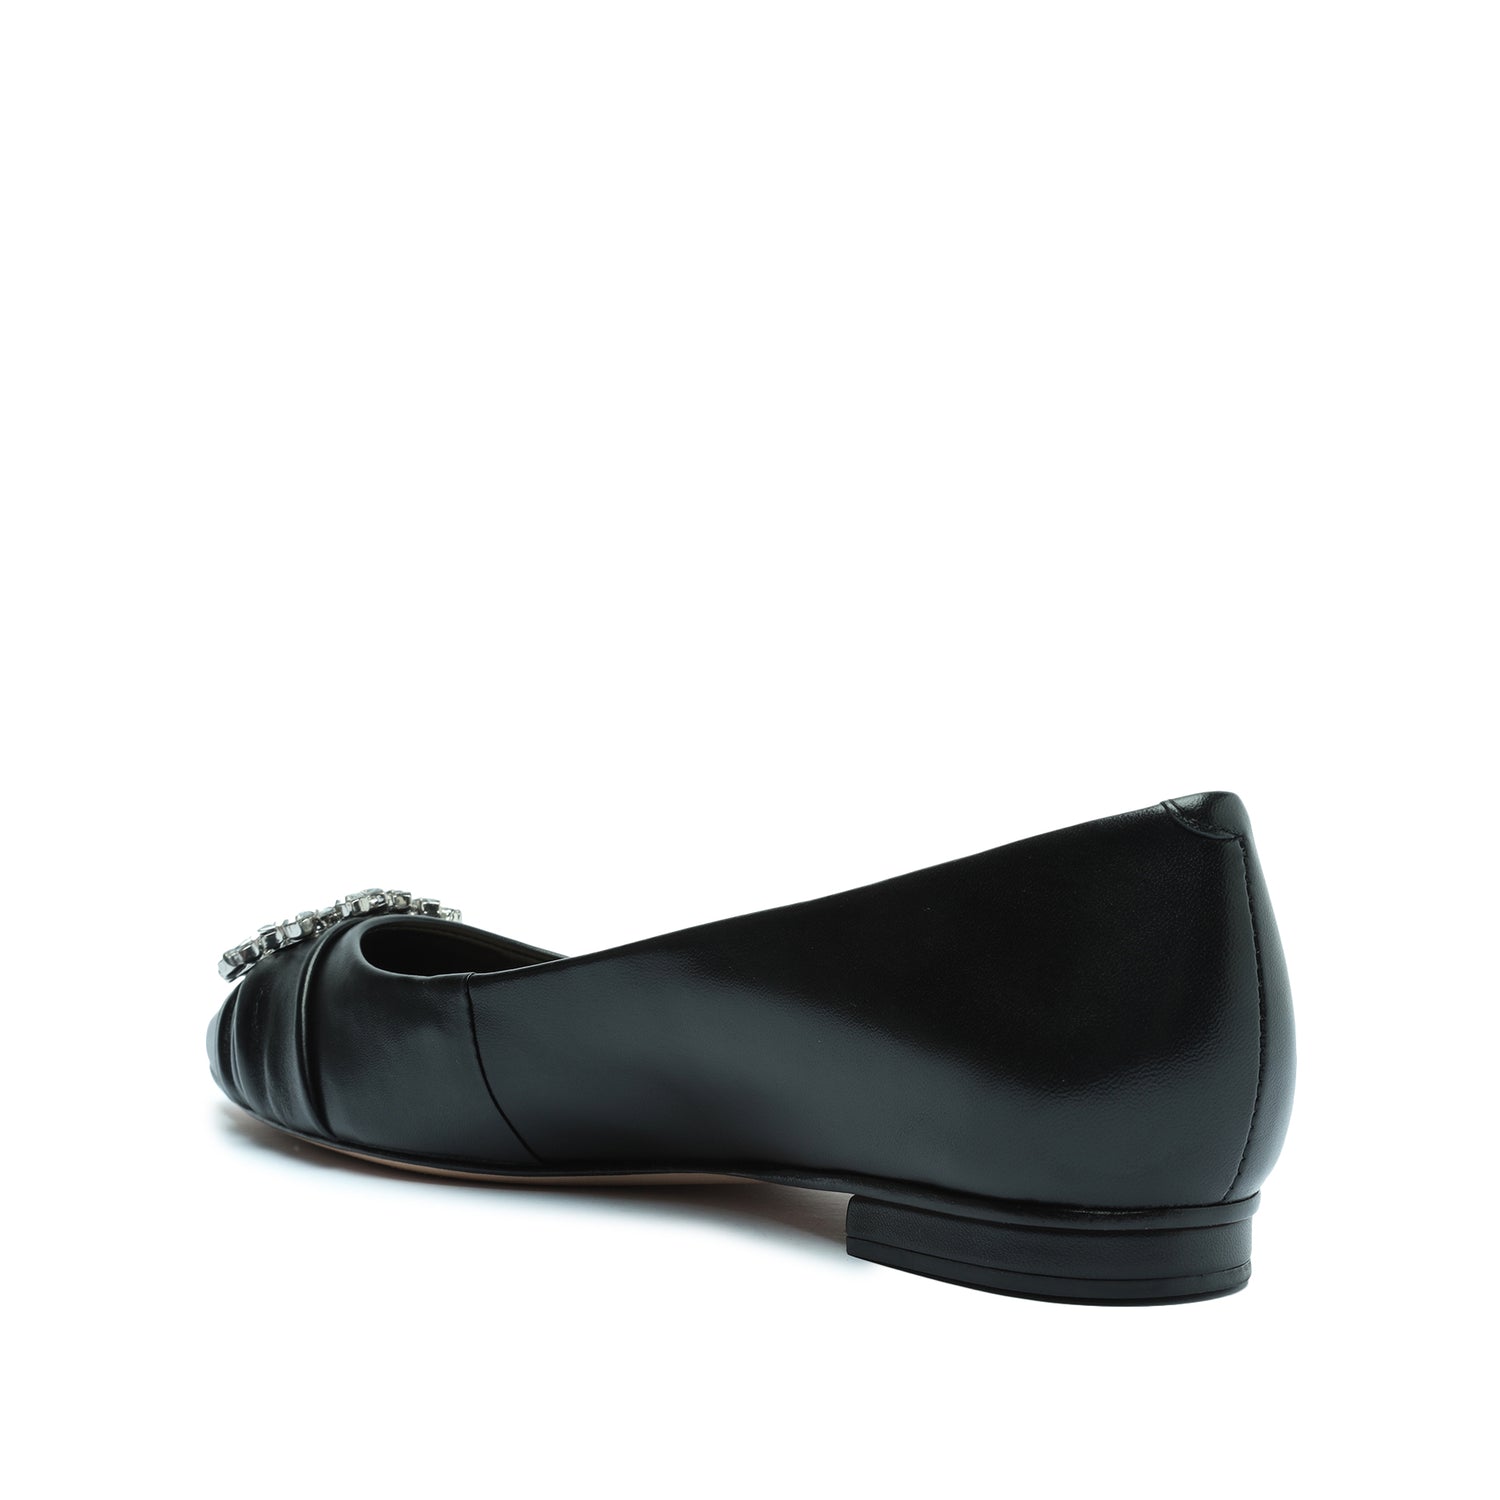 Meisho Nappa Leather Flat Flats Sale    - Schutz Shoes